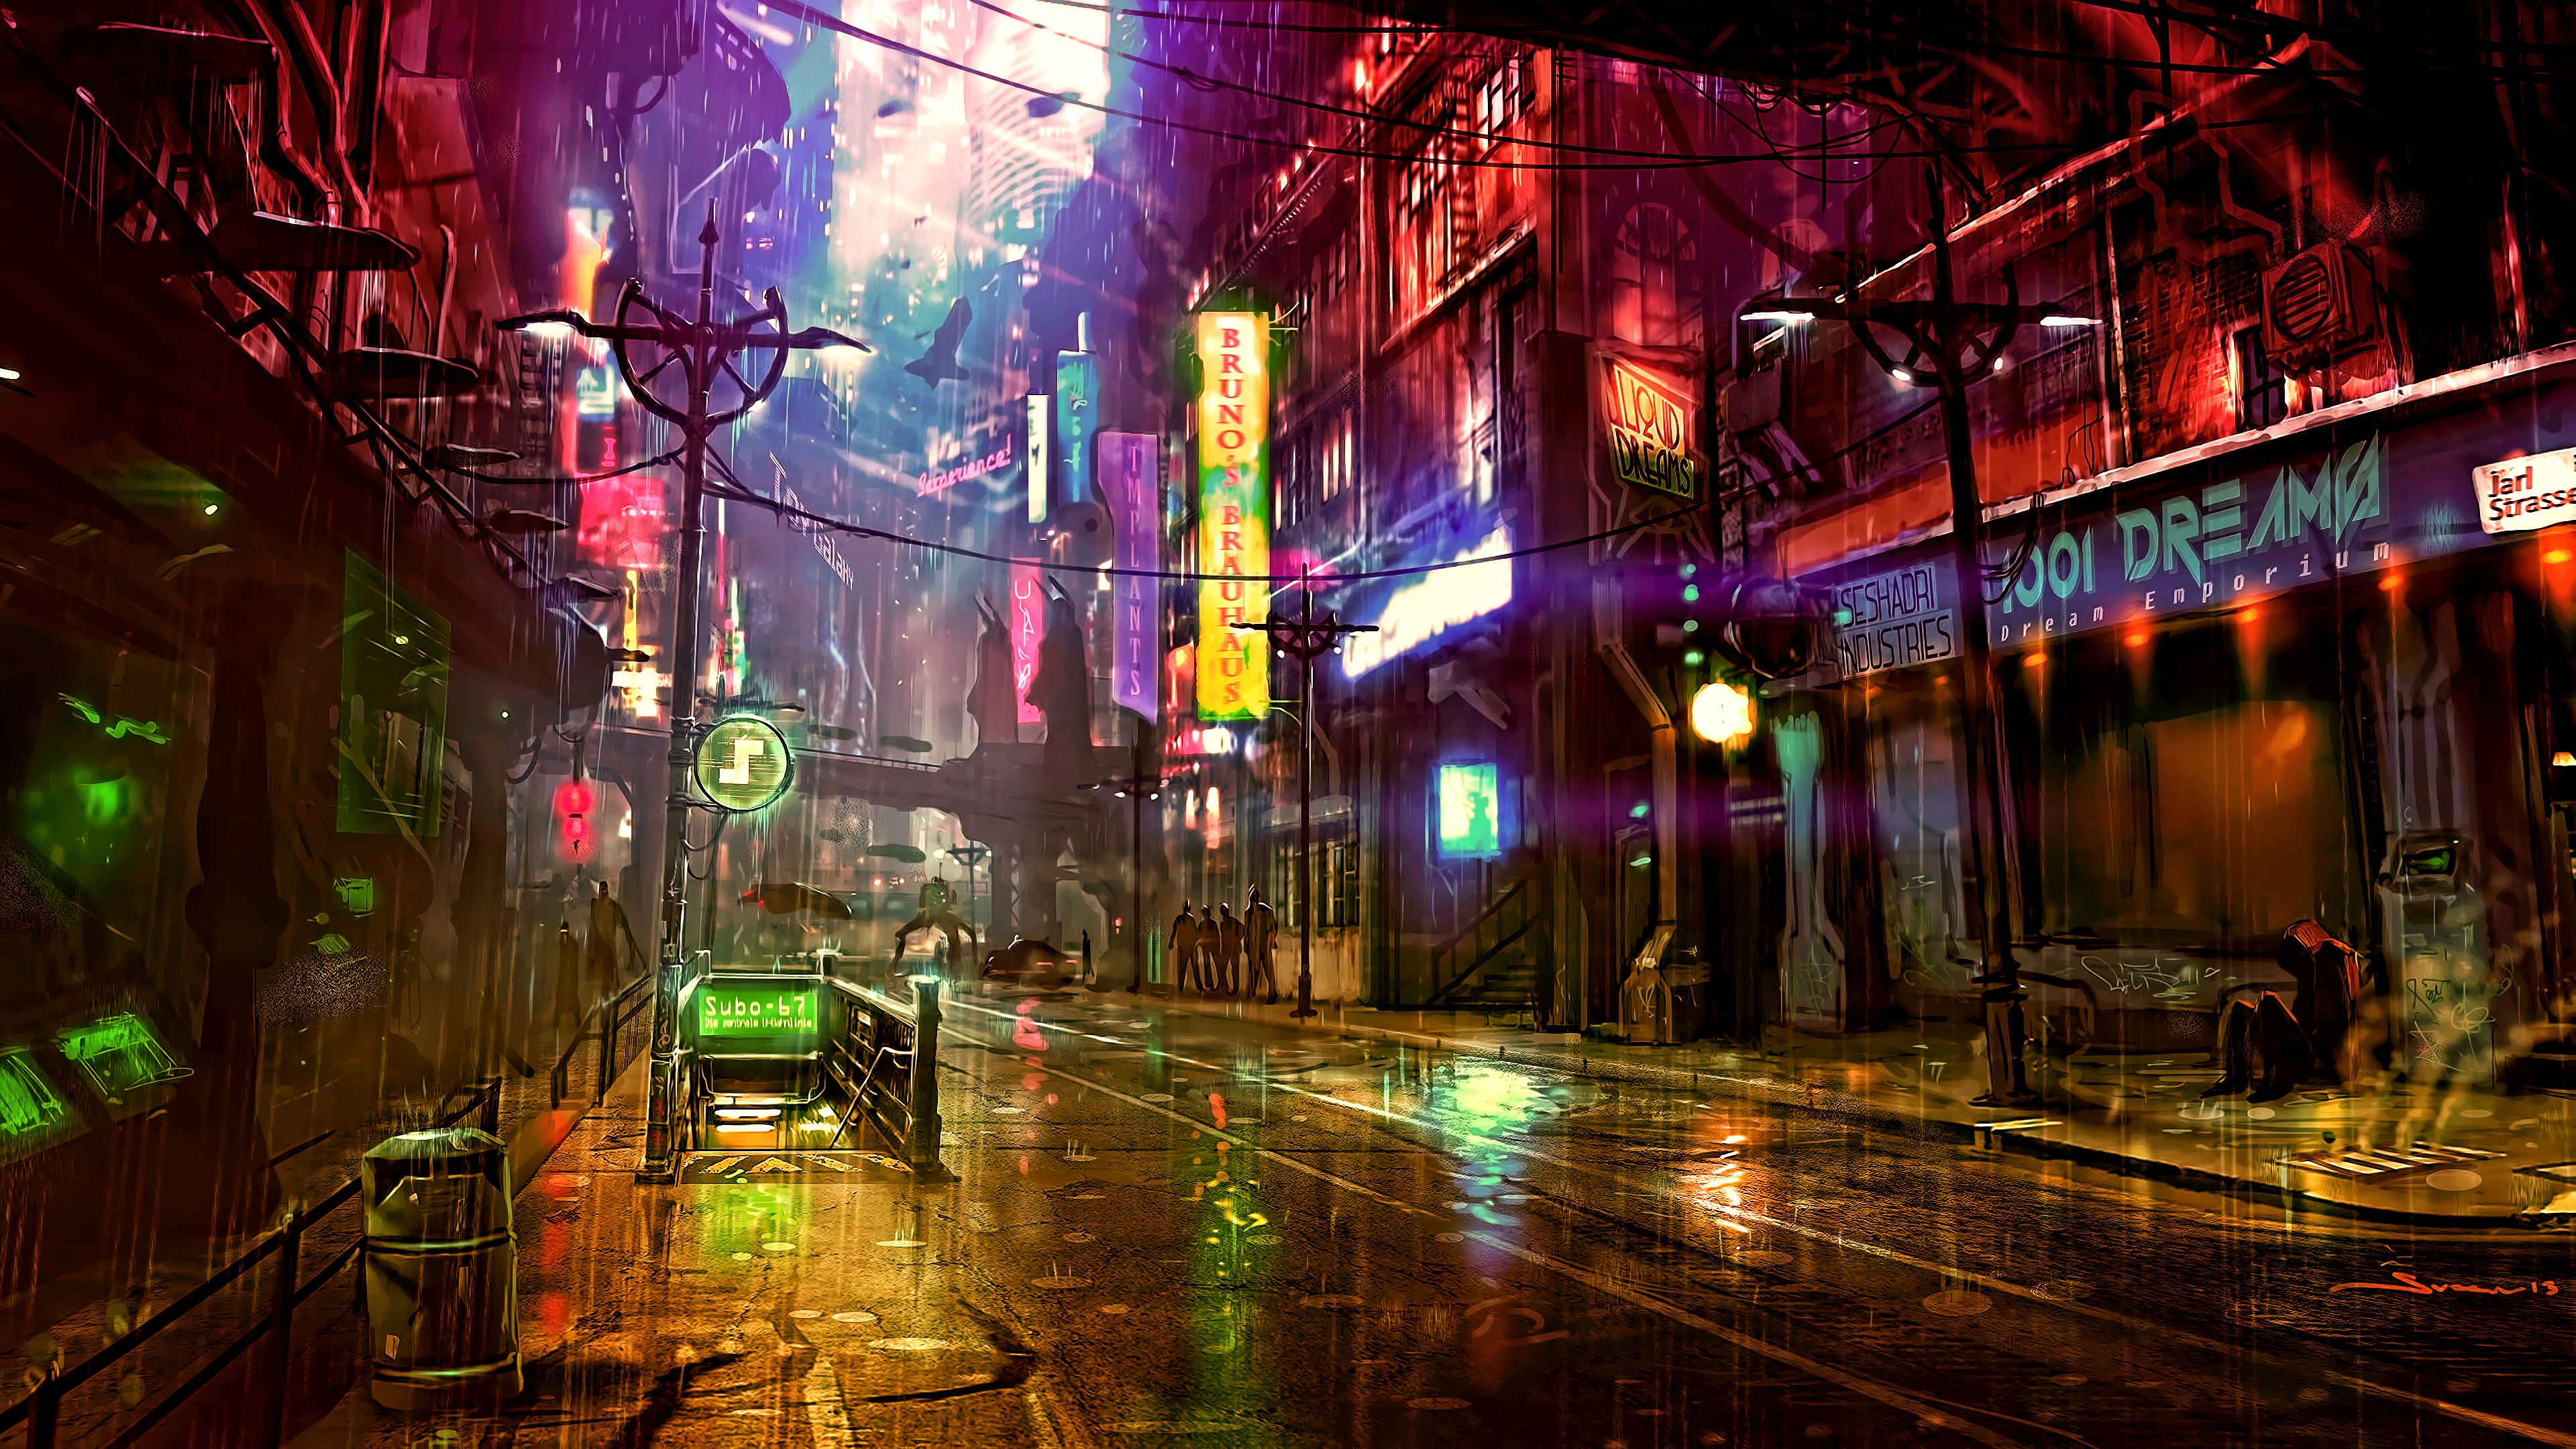 Futuristic City Cyberpunk Neon Street Digital Art 4k, HD Artist, 4k Wallpaper, Image, Background, Photo and Picture